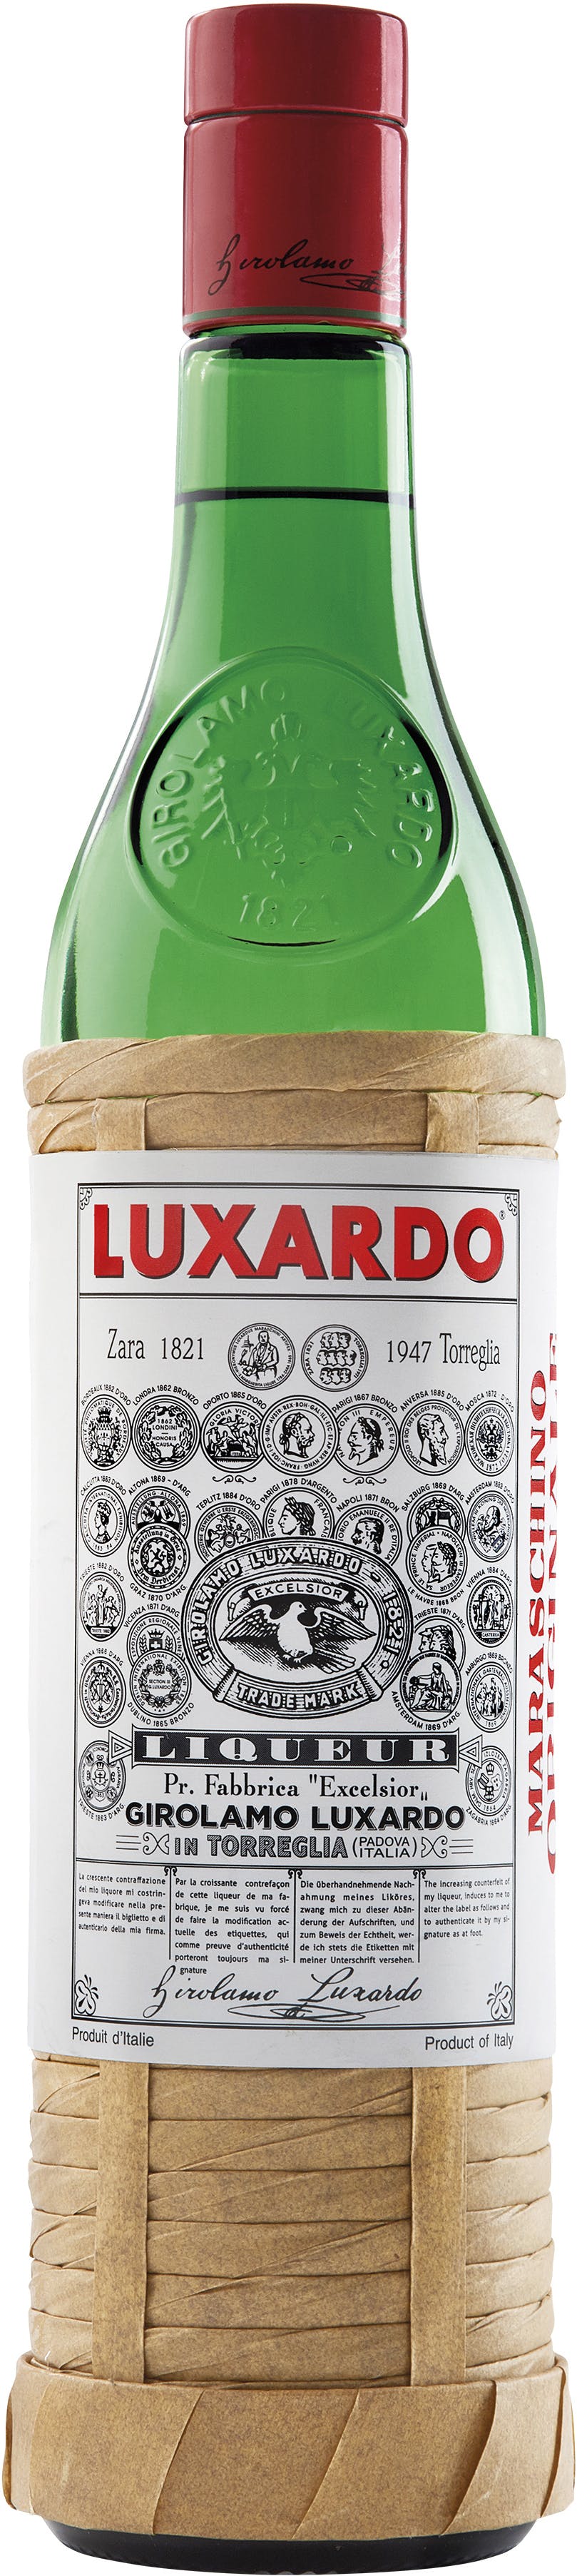 Liqueurs & Cordials - Italy - Luxardo - Wine Enthusiast - $25 to $50 -  Kelly's Liquor